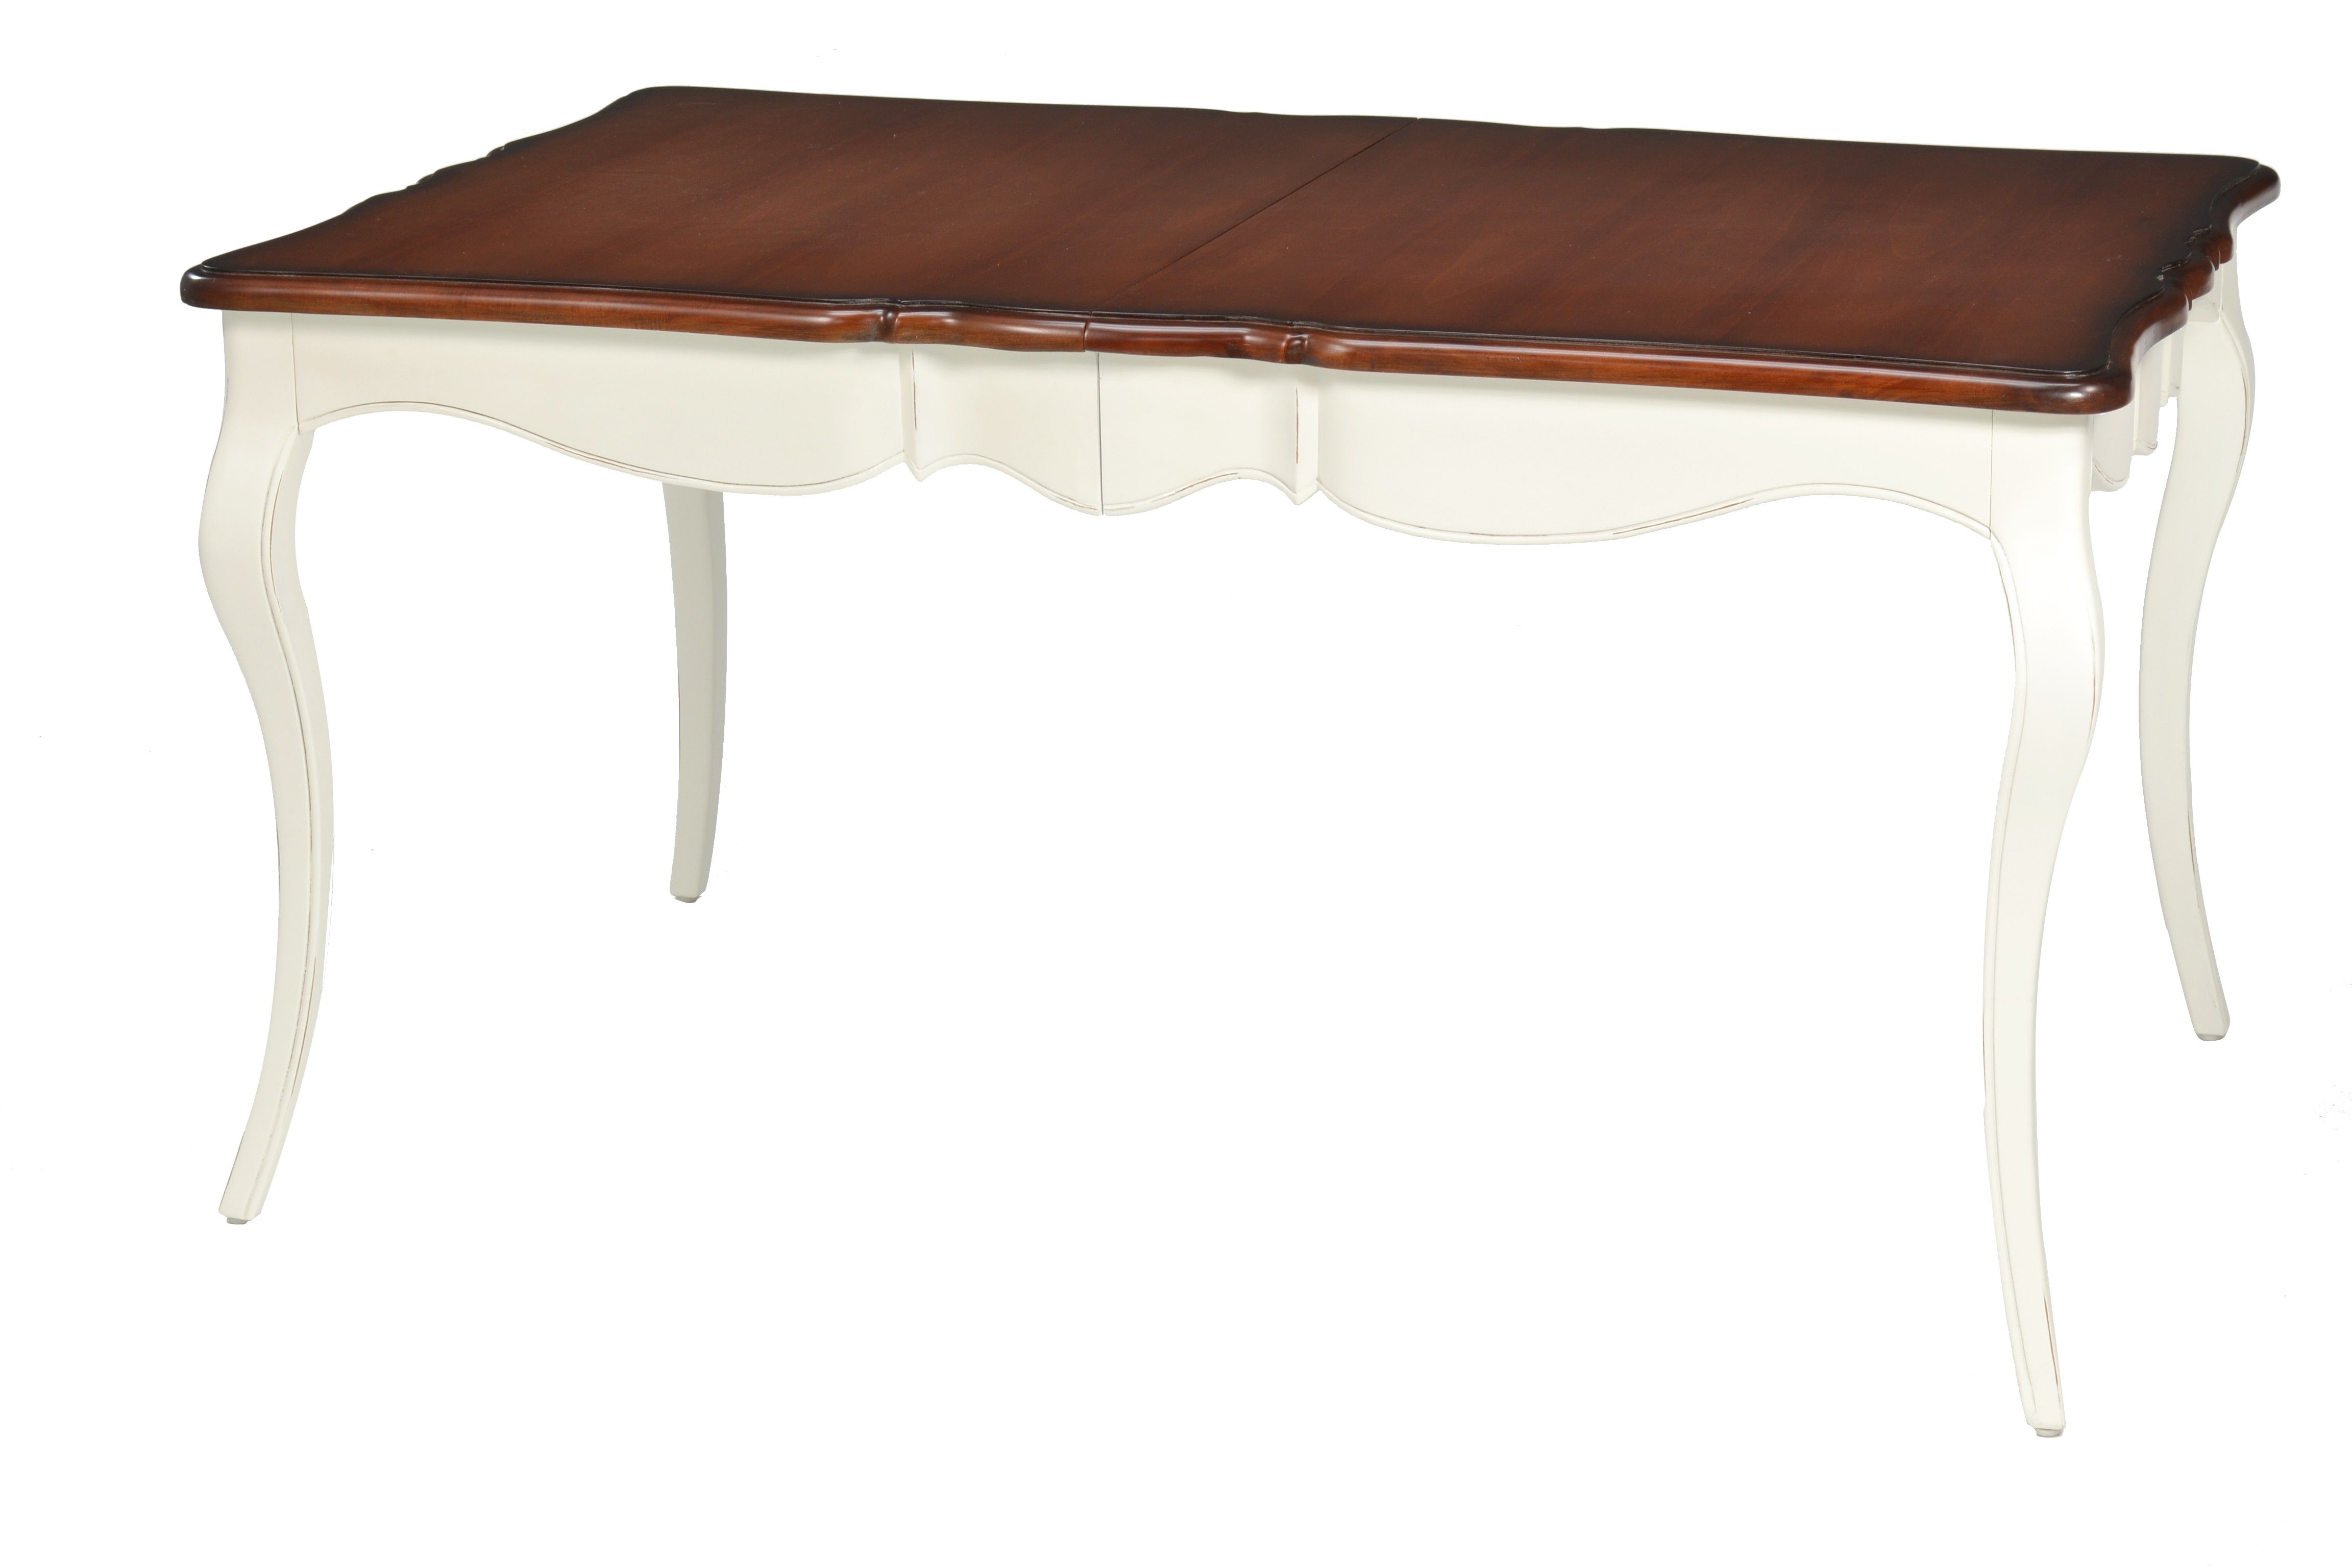 Estila Luxusný provensálsky masívny rozkladací jedálenský stôl s tmavou vrchnou doskou a bielou konštrukciou 230cm